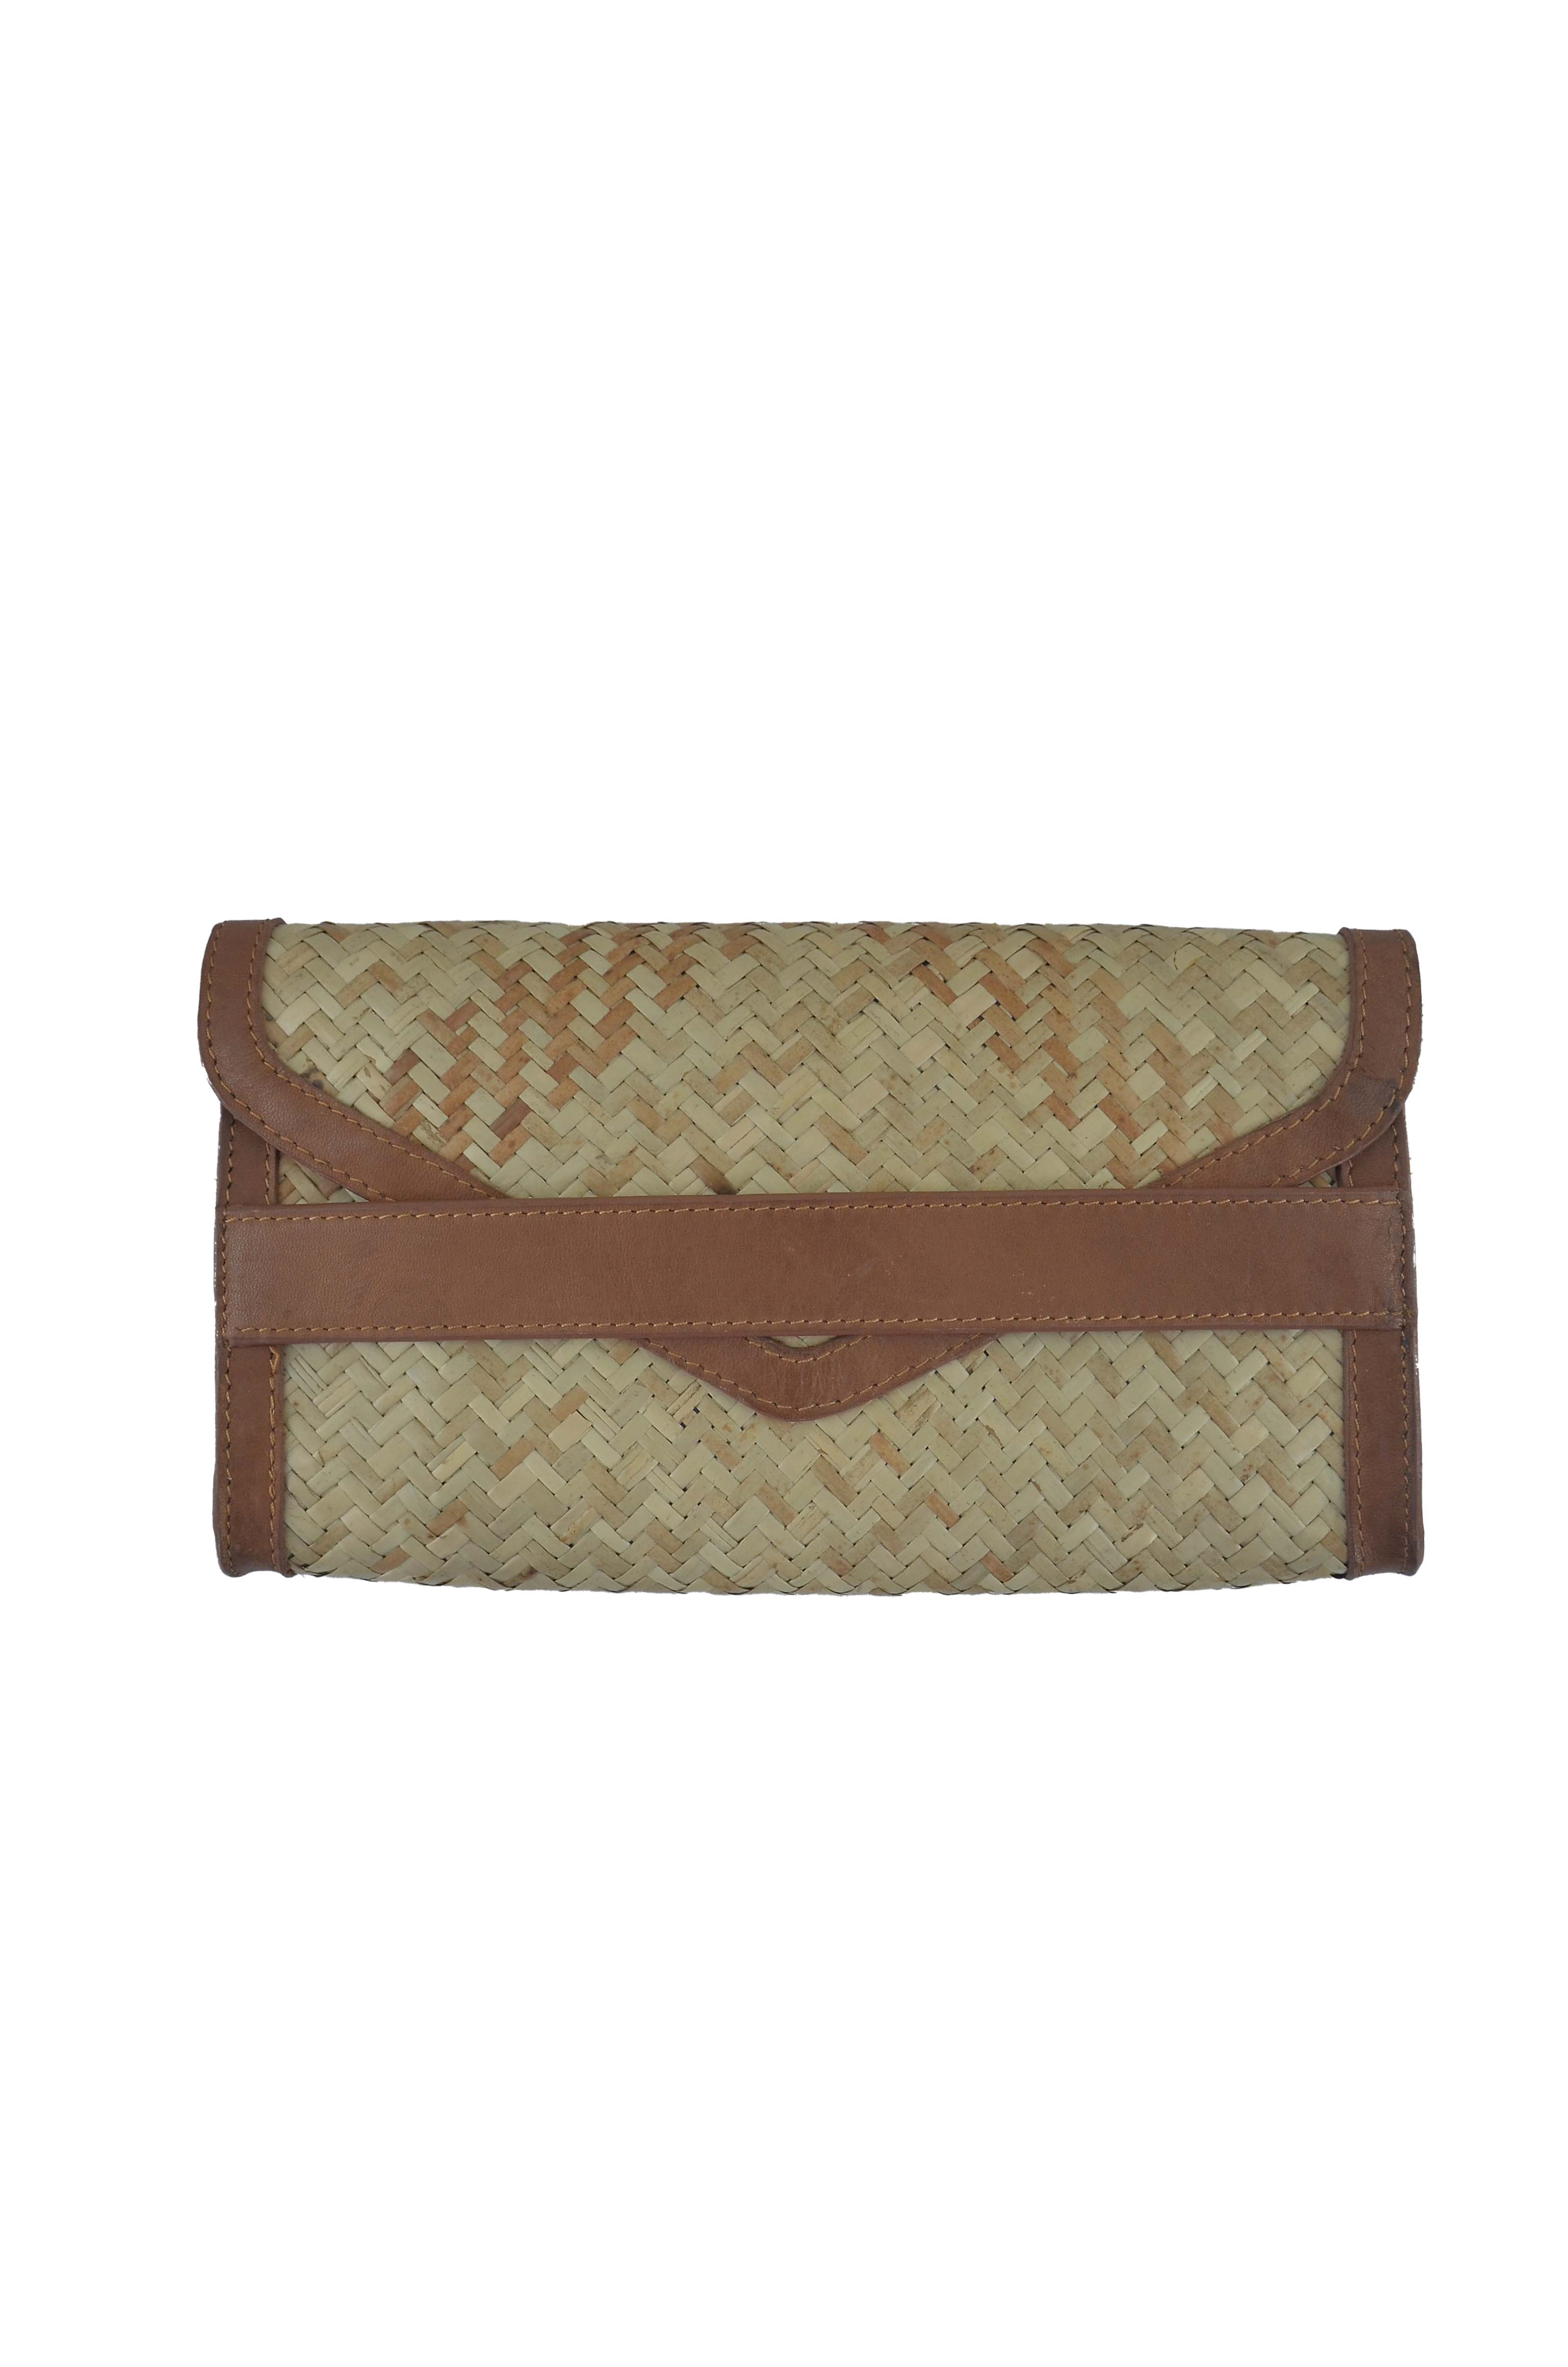 Cane Clutch Bag : Brown Variant